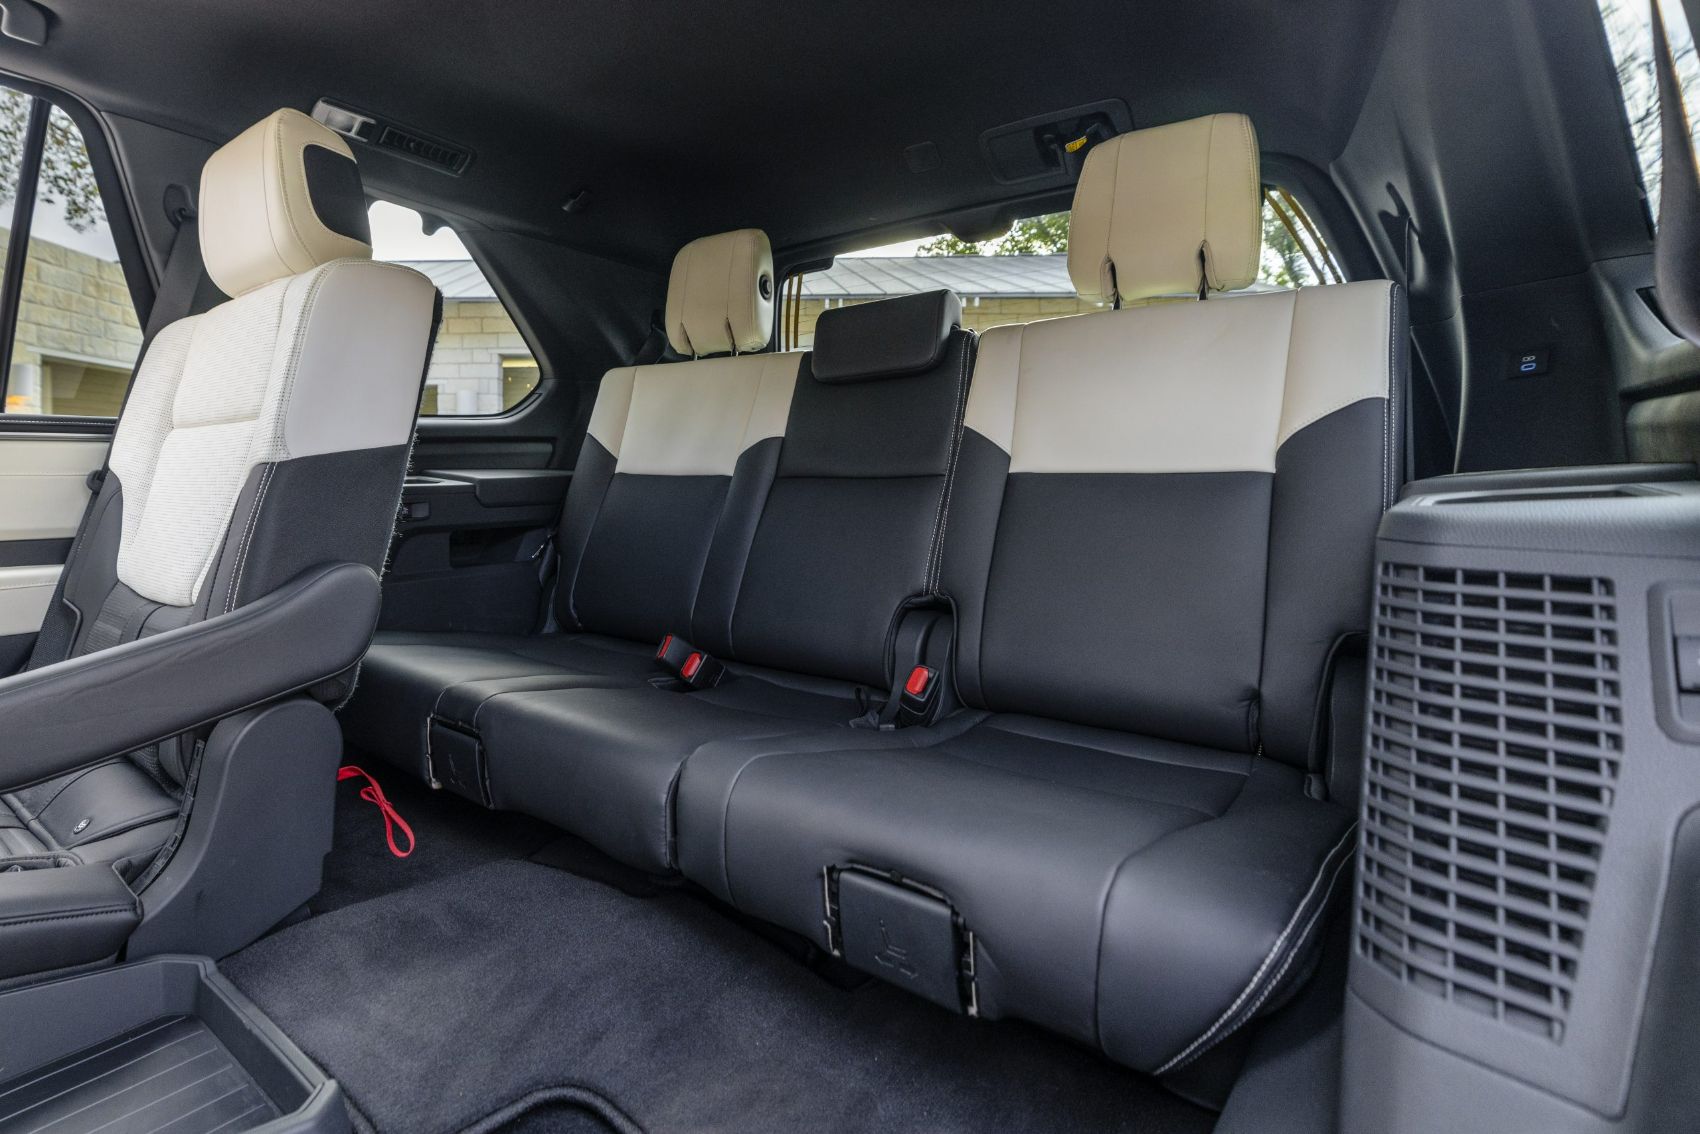 2023 Toyota Sequoia Capstone interior layout.